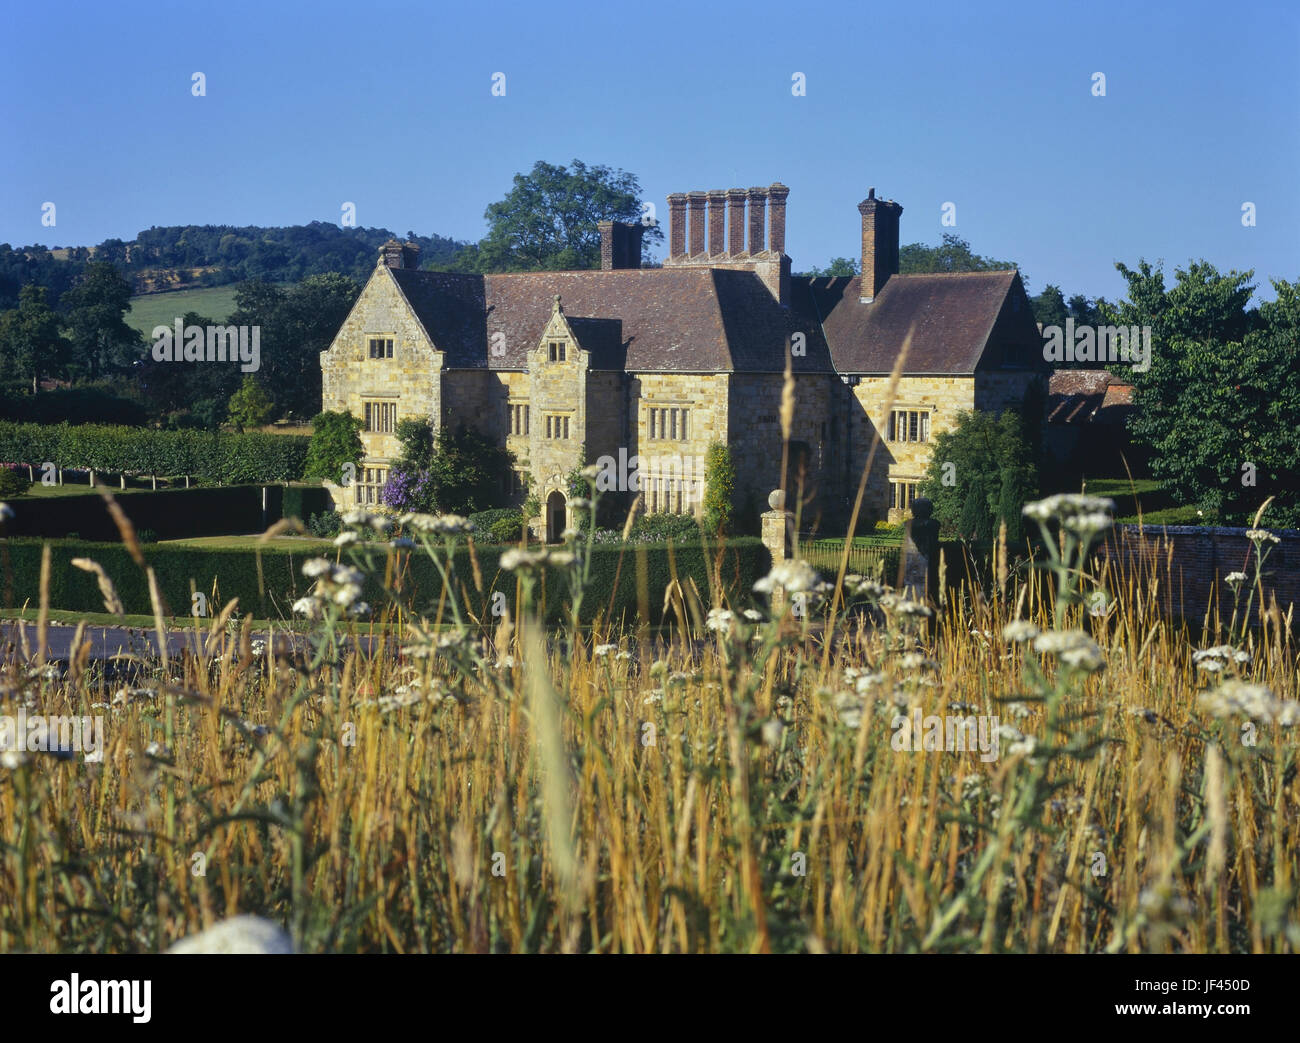 Rudyard Kipling's home, Bateman's, Burwash, East Sussex. England. UK Stock Photo